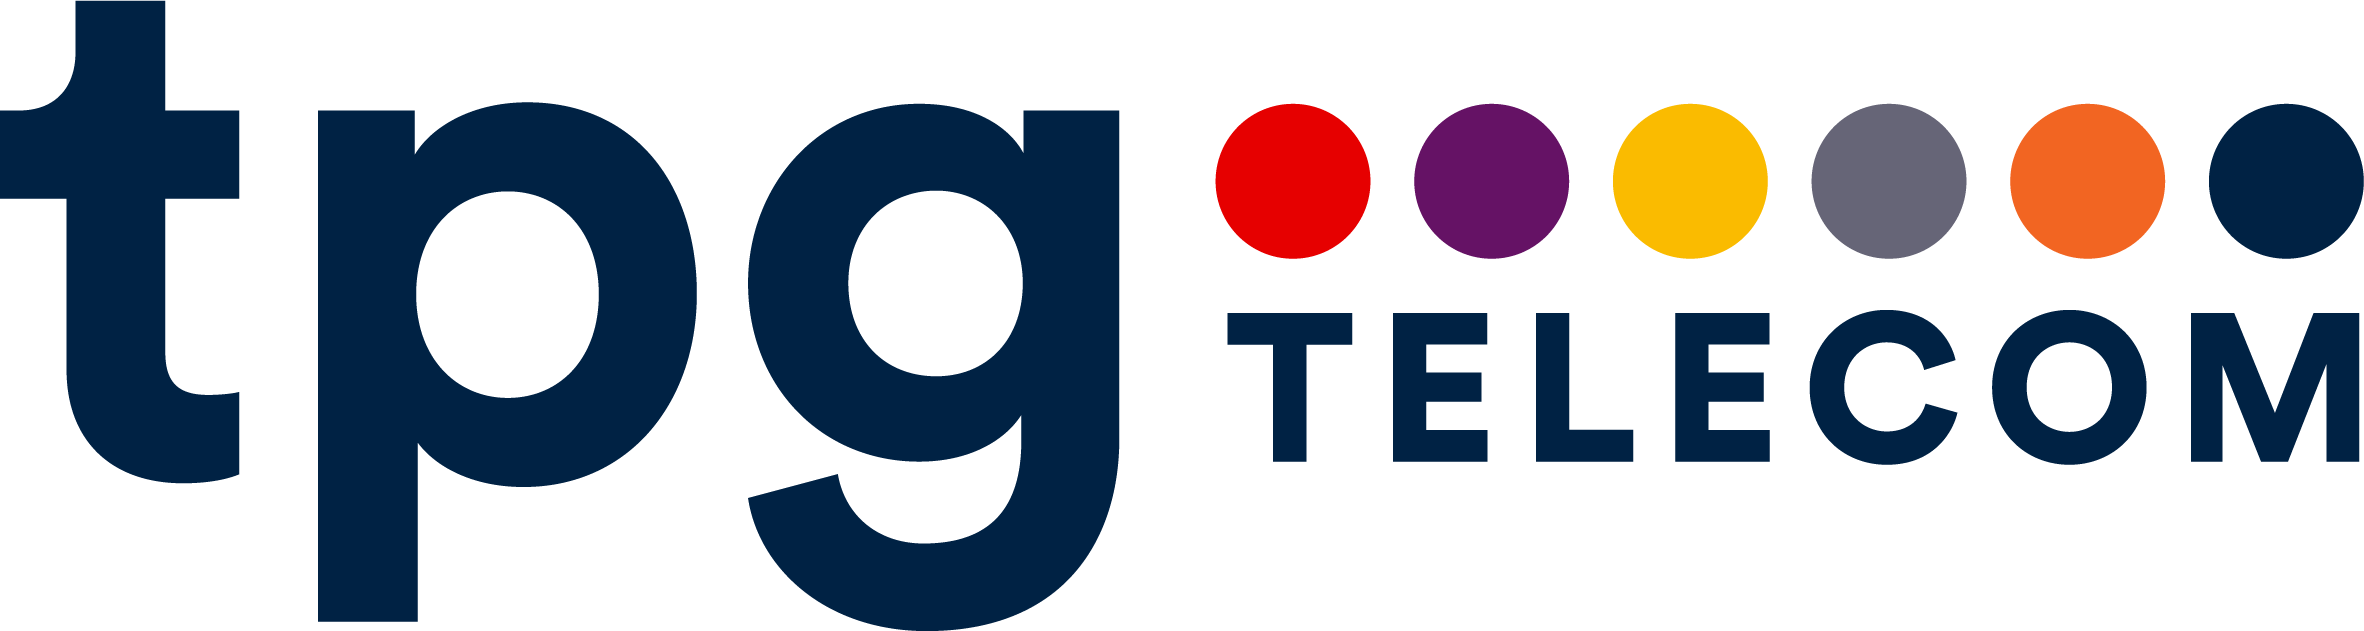 TPG Telecom Logo  - Delegate Sponsor